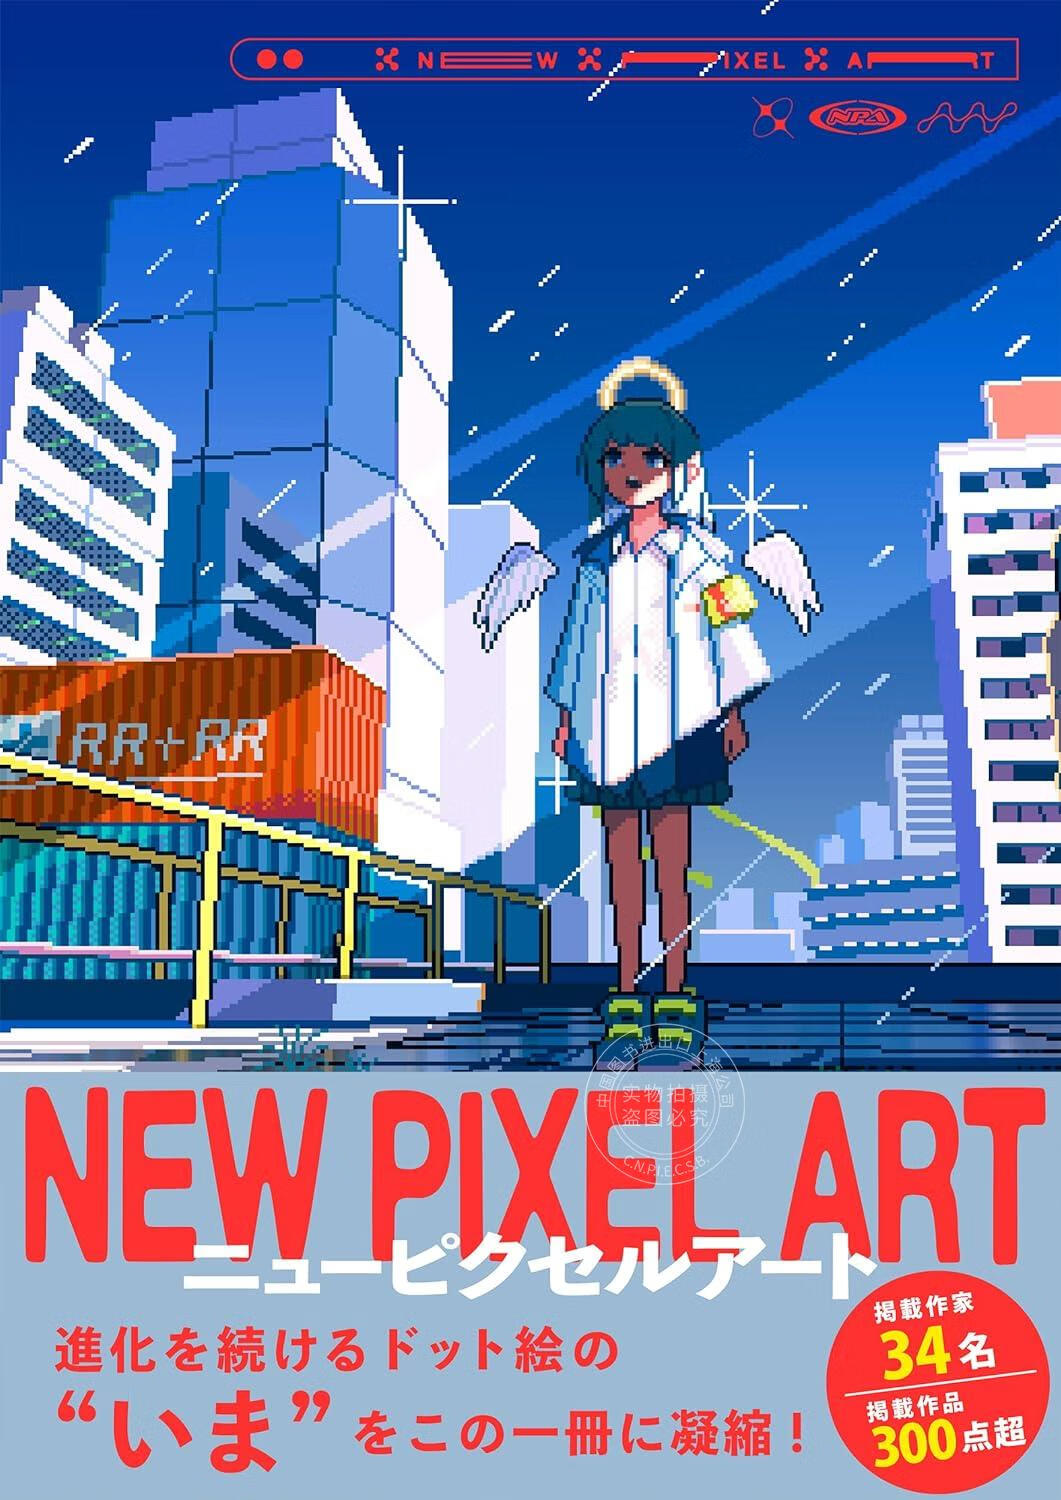 现货 进口日文 像素画作品集 NEW PIXEL ART - ニューピクセルアート 34名前沿创作者 含访谈使用感如何?